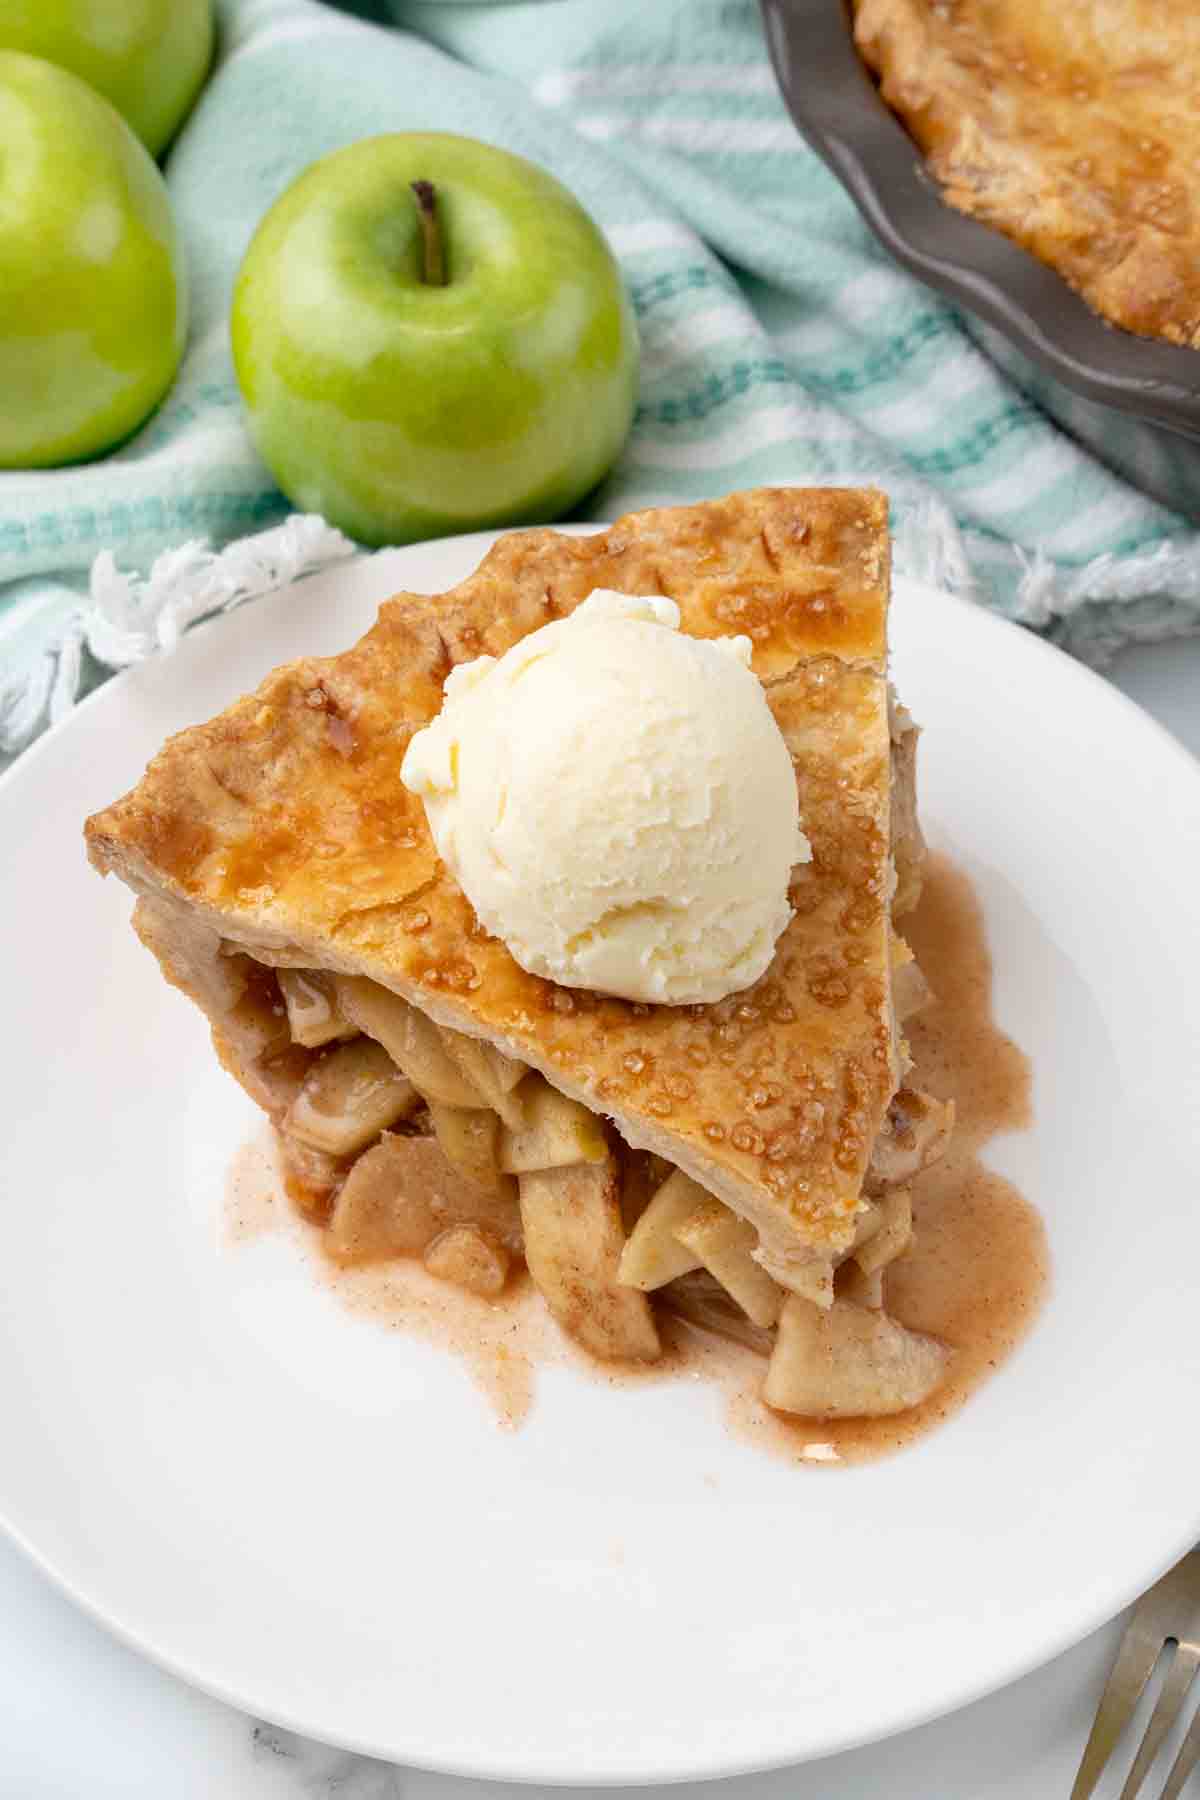 Slice of apple pie with vanilla ice cream on a white plate.